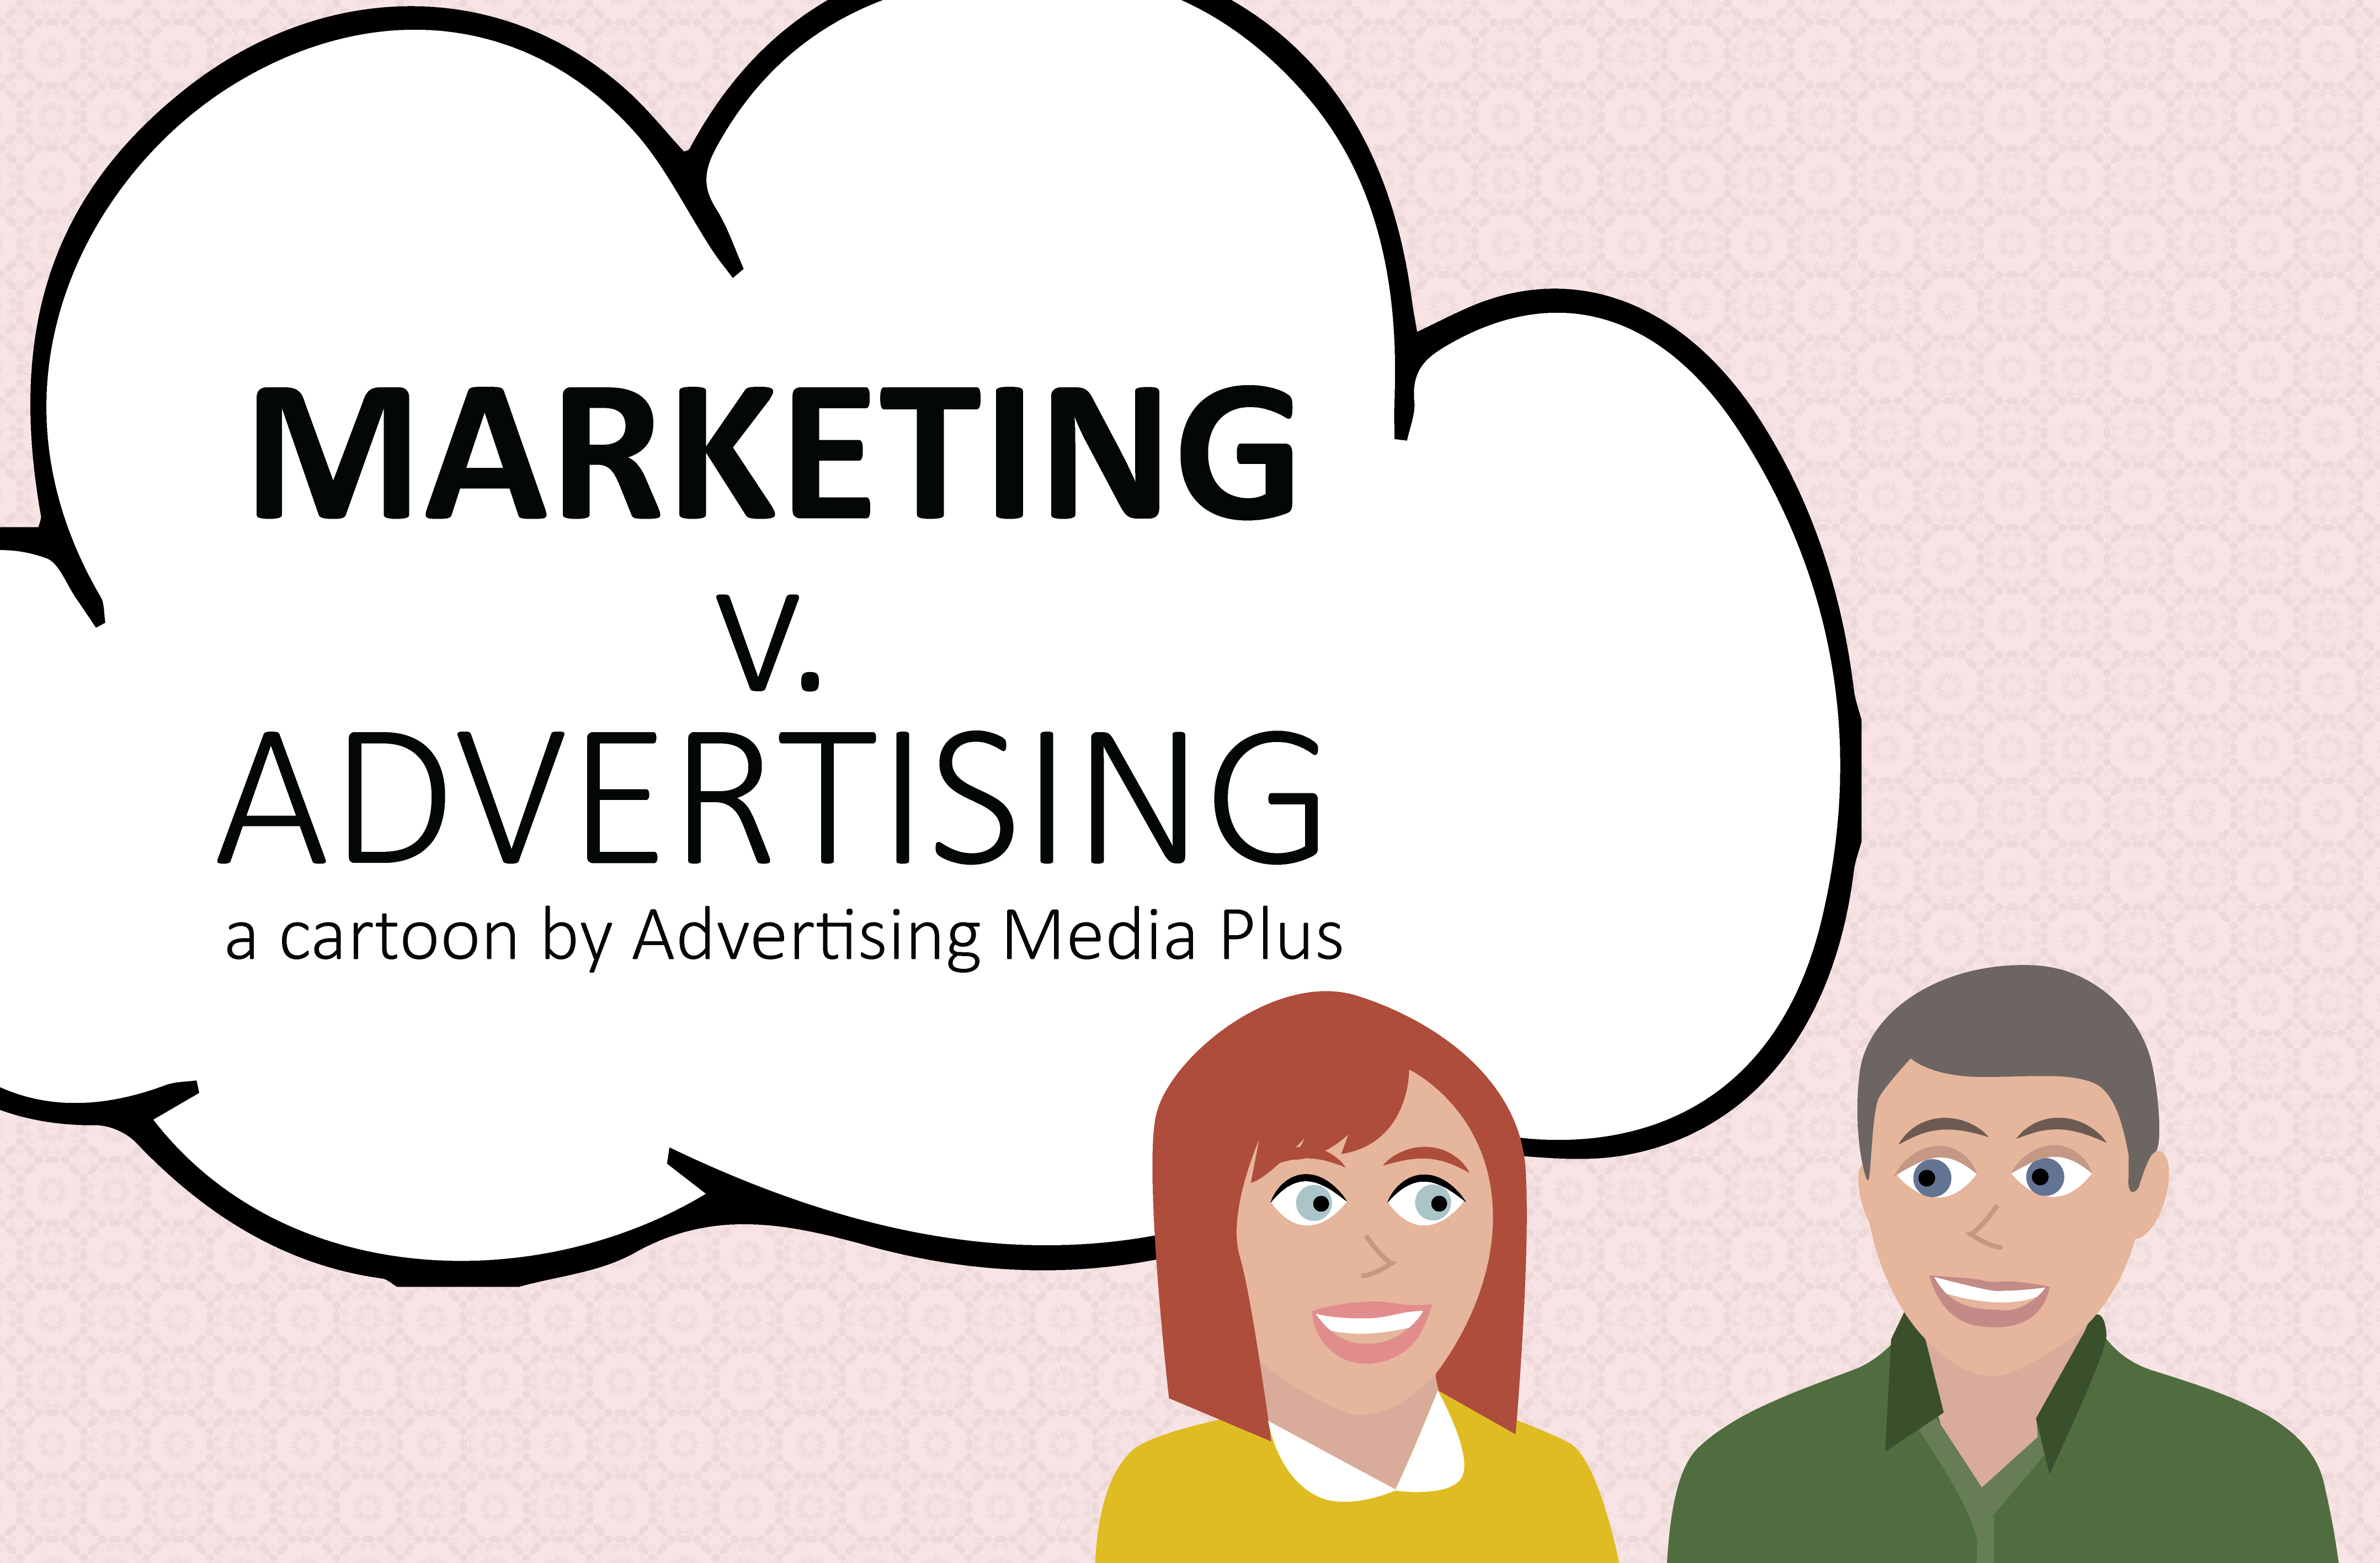 Advertising marketing is. Адвертайзинг Медиа. Marketing and advertising. Difference between advertising and marketing. Ads marketing advertising.